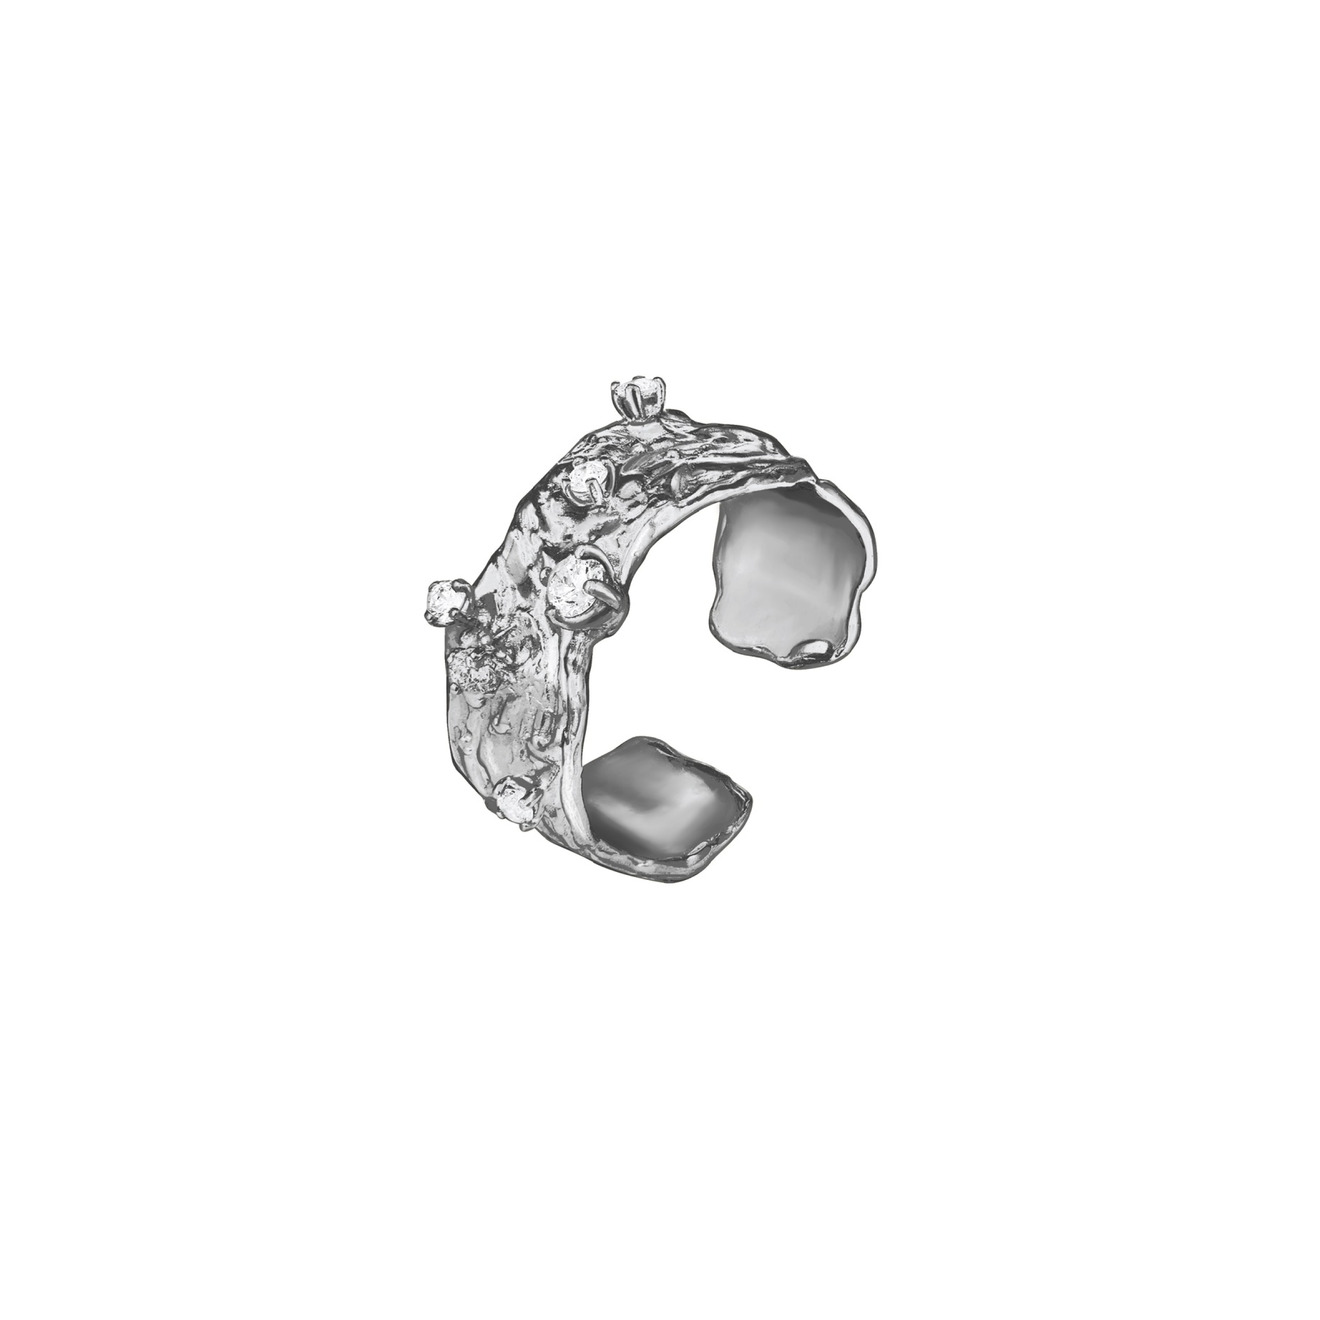 Nastya Maximova Безразмерное кольцо из серебра с фианитами nastya maximova позолоченнок кольцо из серебра с большими ласточками